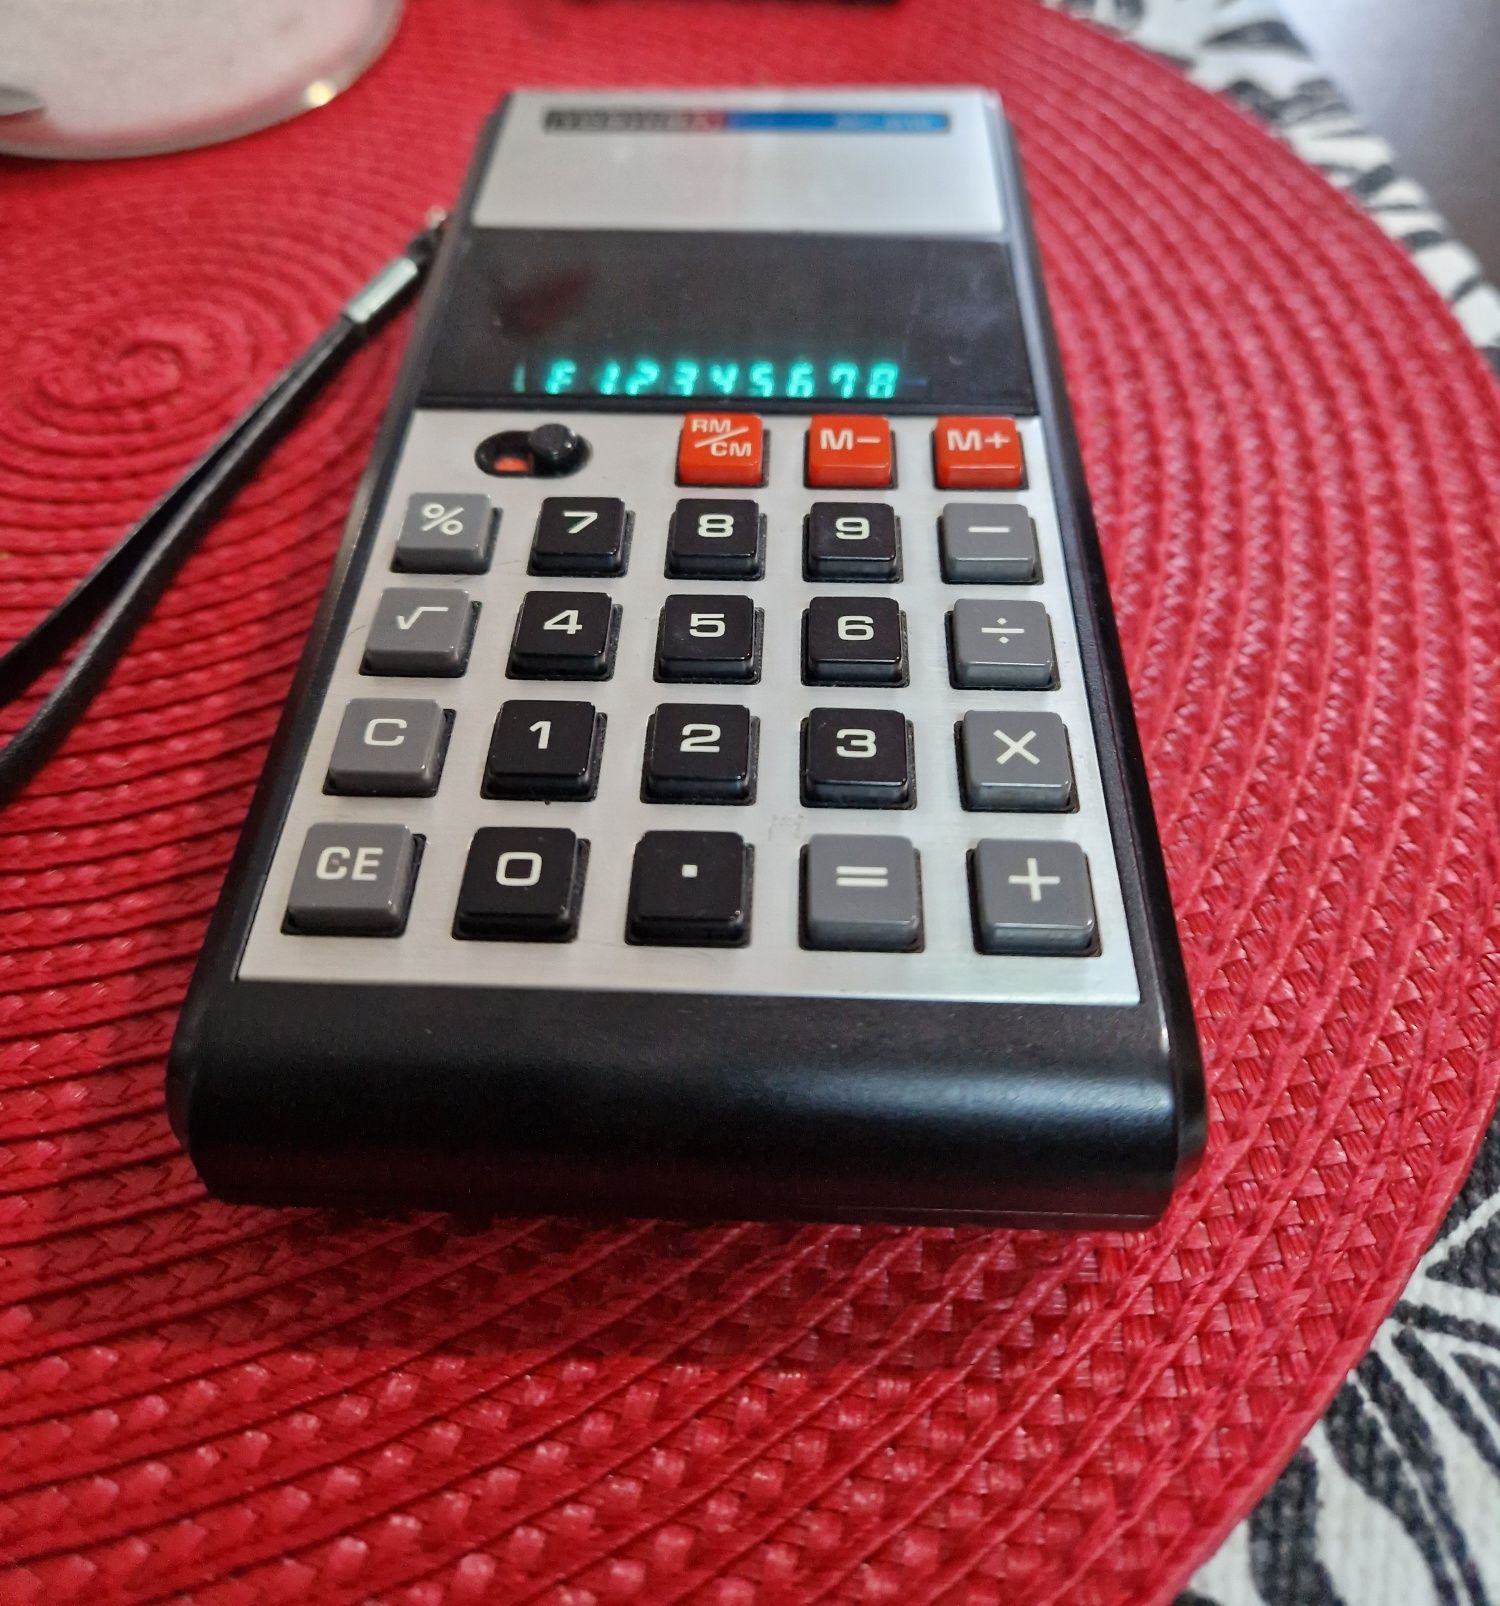 Calculator de birou. Toshiba BC-815.